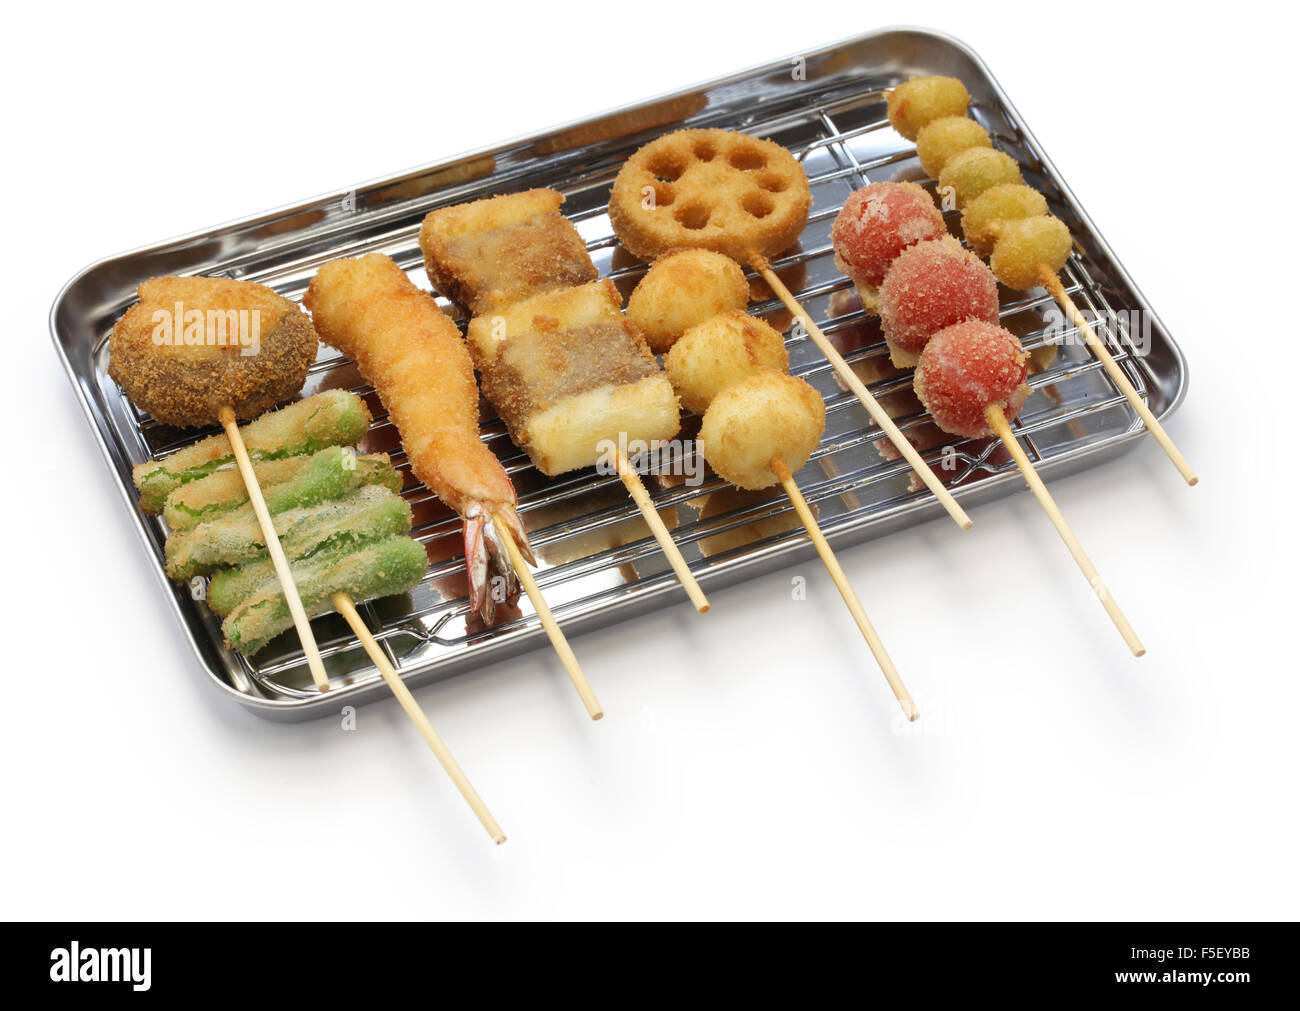 kushiage(deep fried food on a stick),japanese food Stock Photo